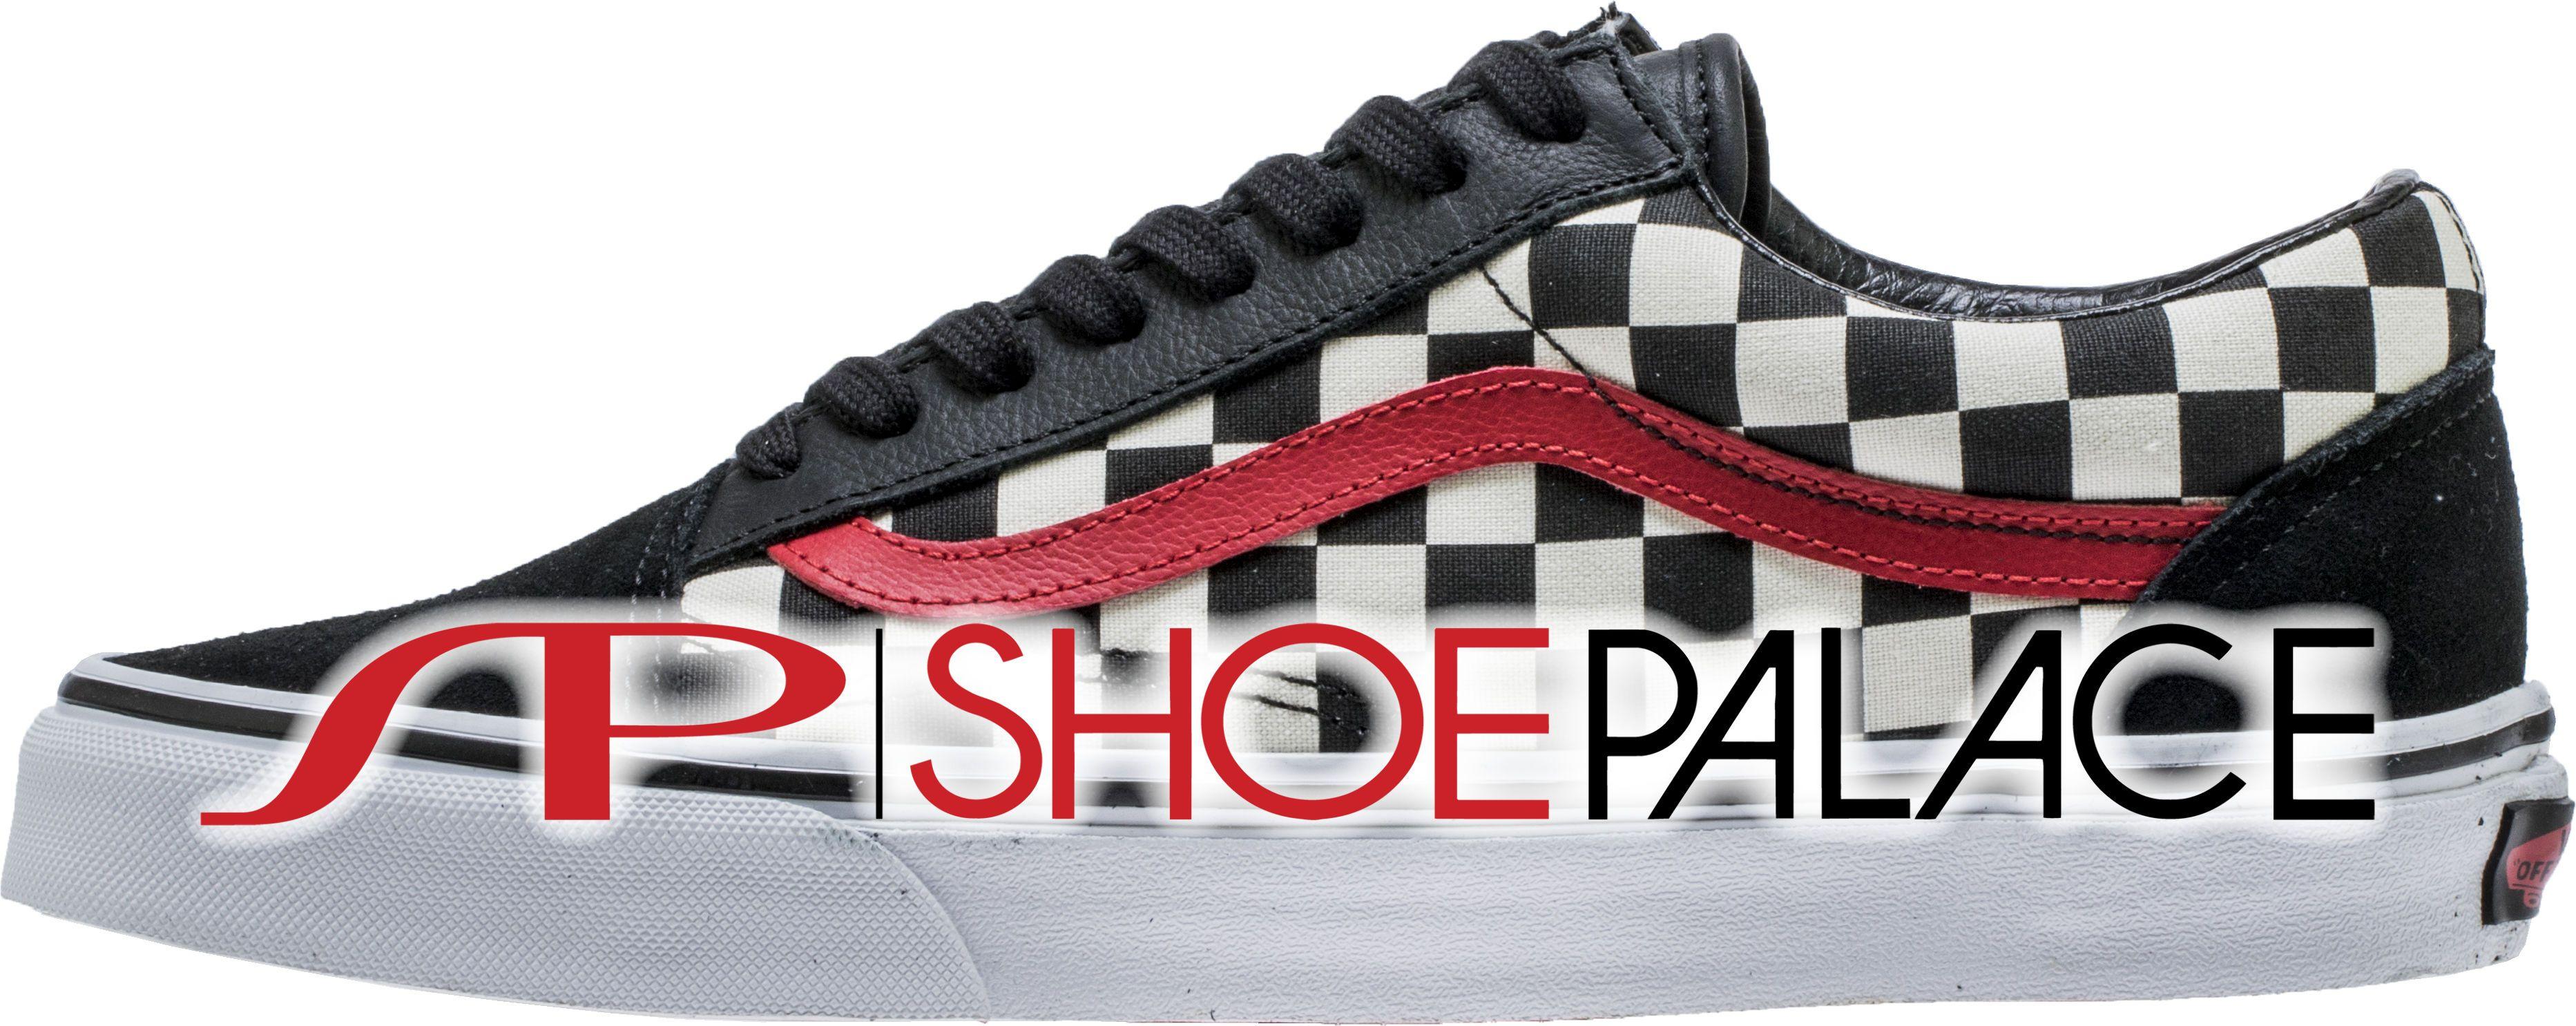 Black and Red Vans Logo - Vans 8G1RCV Shoe Palace x Vans 25th Anniversary Old Skool Adult Shoe ...